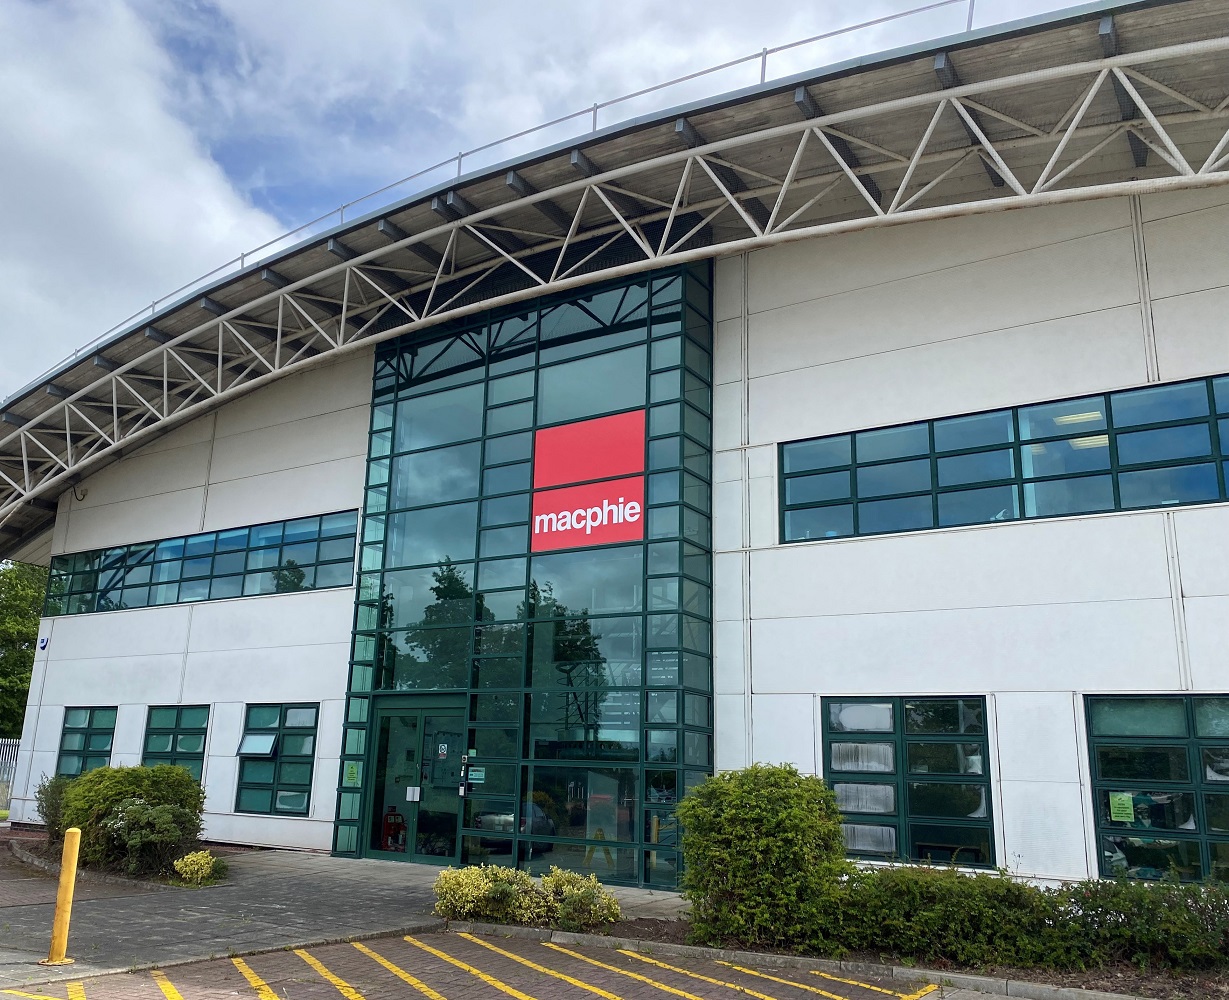 Food manufacturer completes £4m refurbishment of Uddingston facility